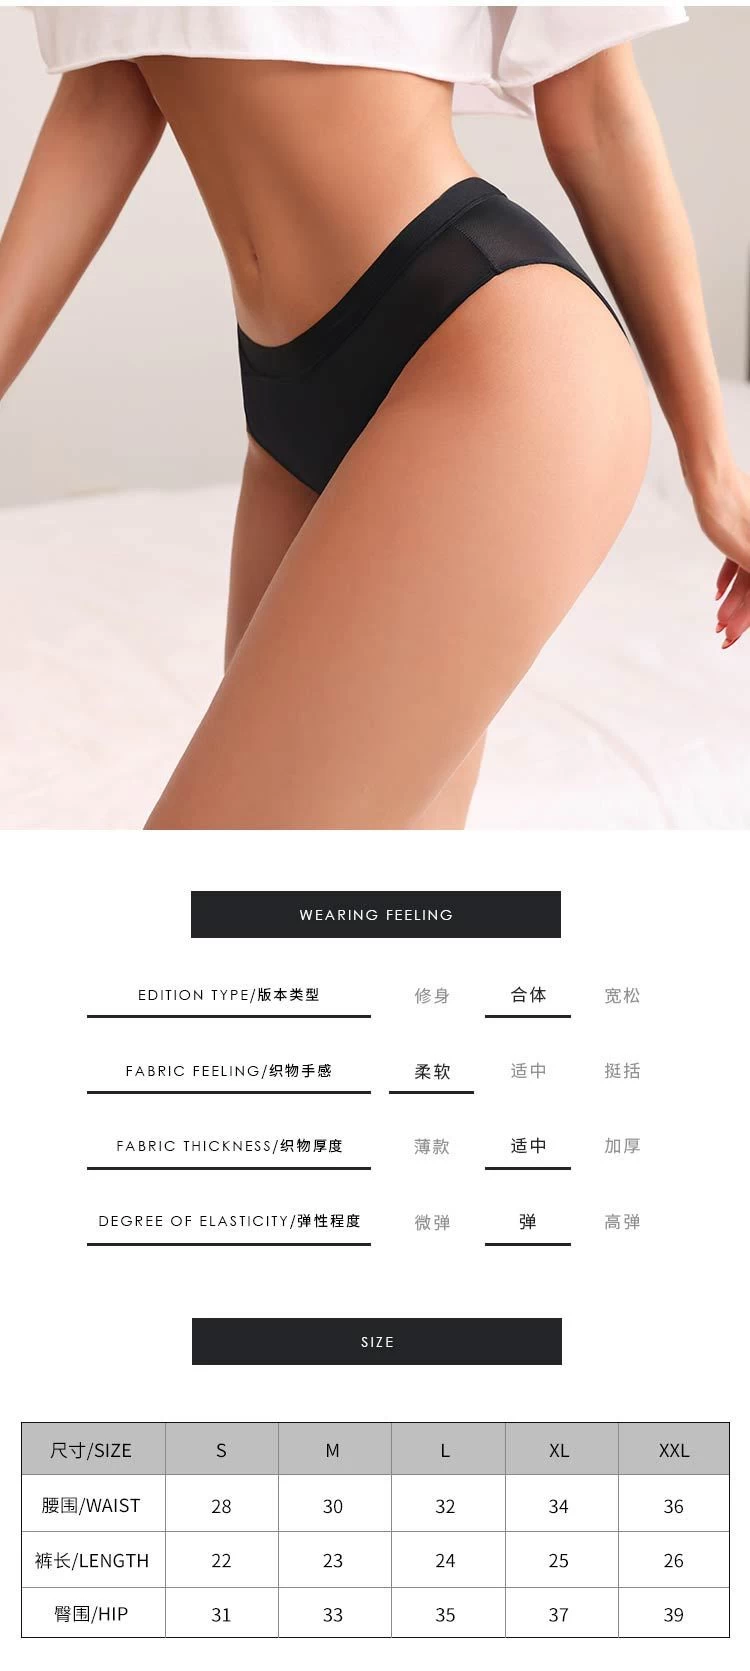 China Leak proof panties Factory